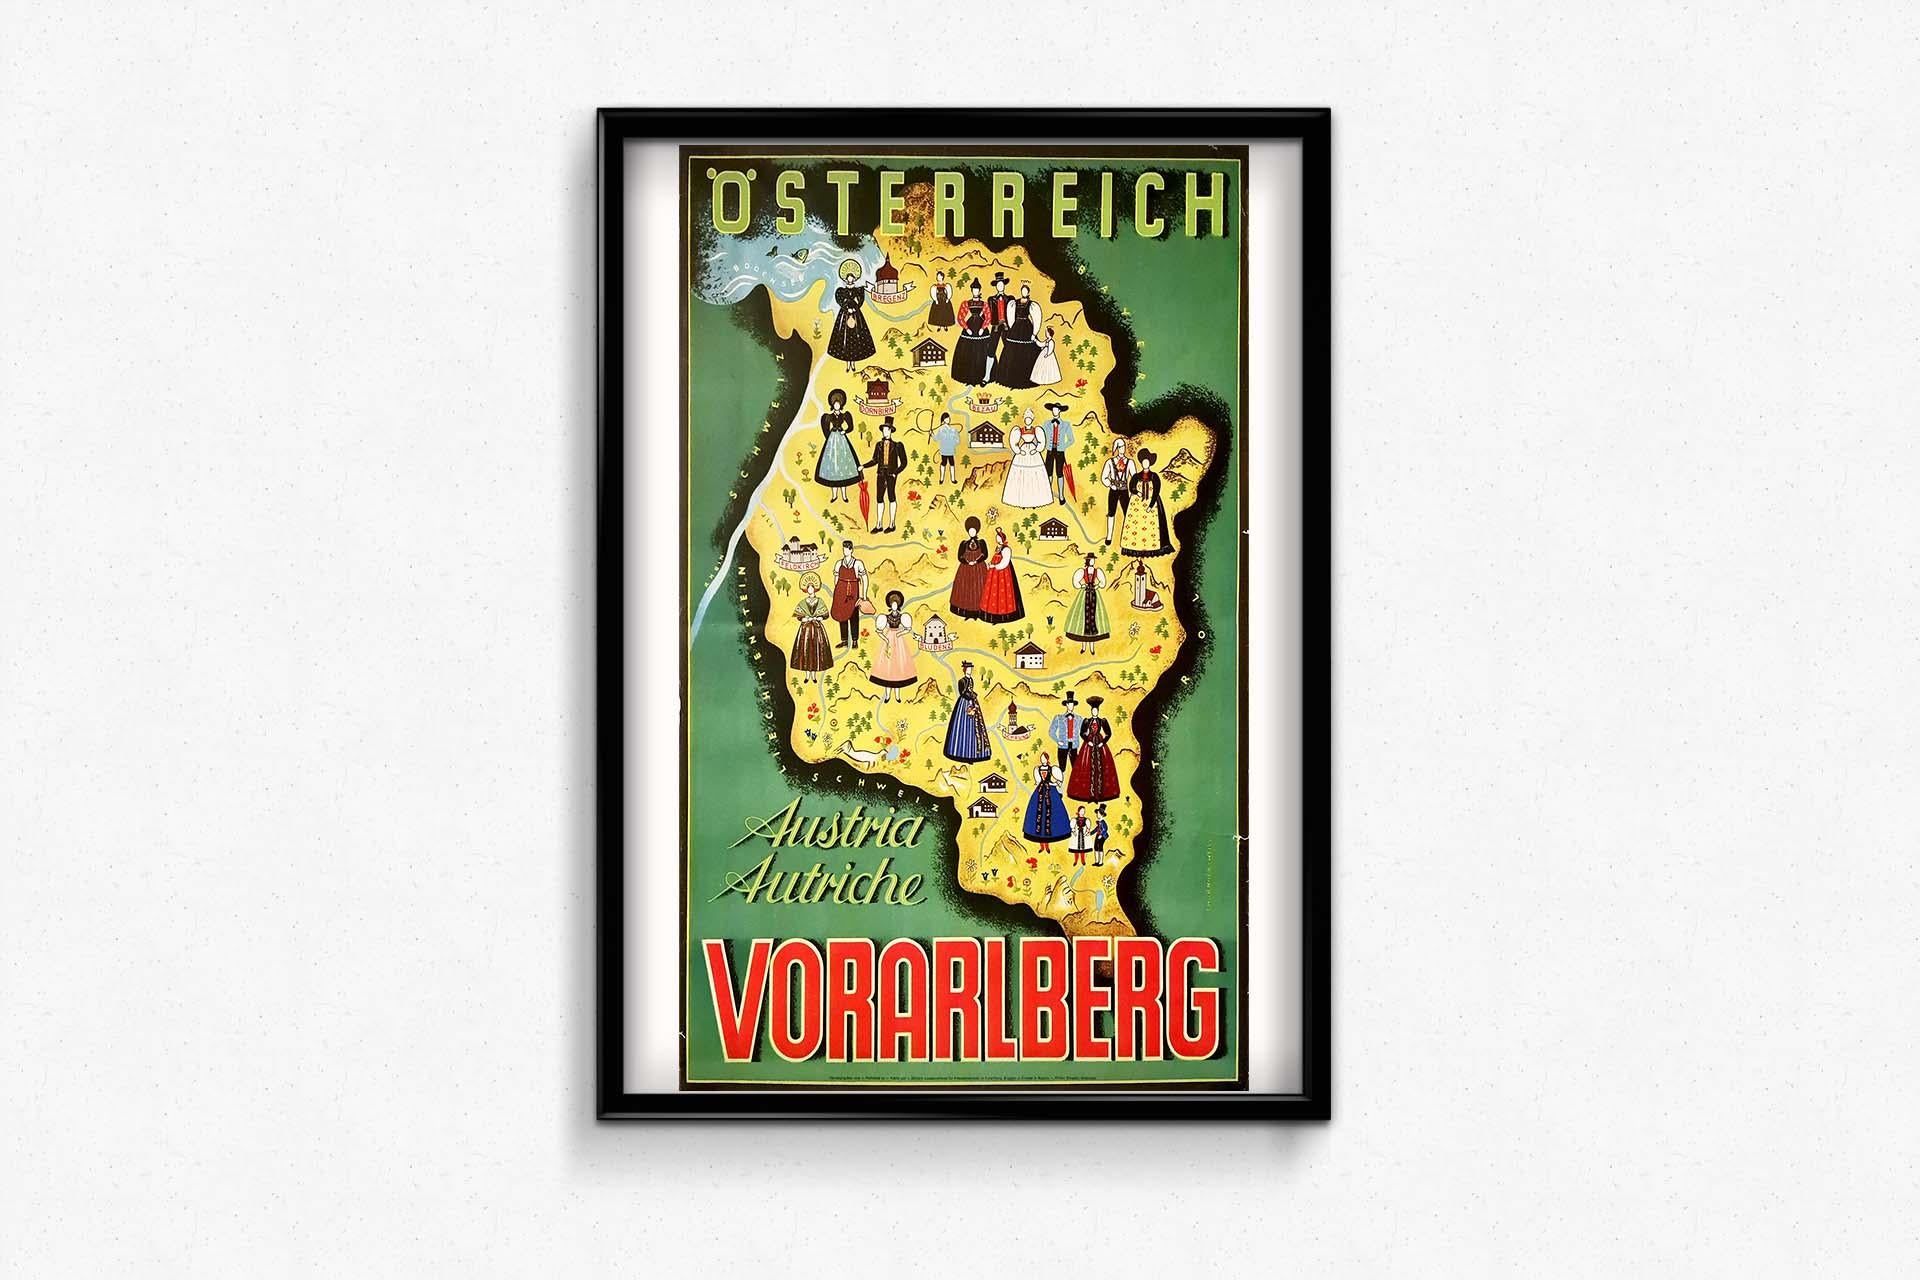 Original poster of Thurnher Weiss representing an illustrated map of Vorarlberg which is a region of Austria.

Tourism - Austria - Map

Graphik Tiroler Innsbruck